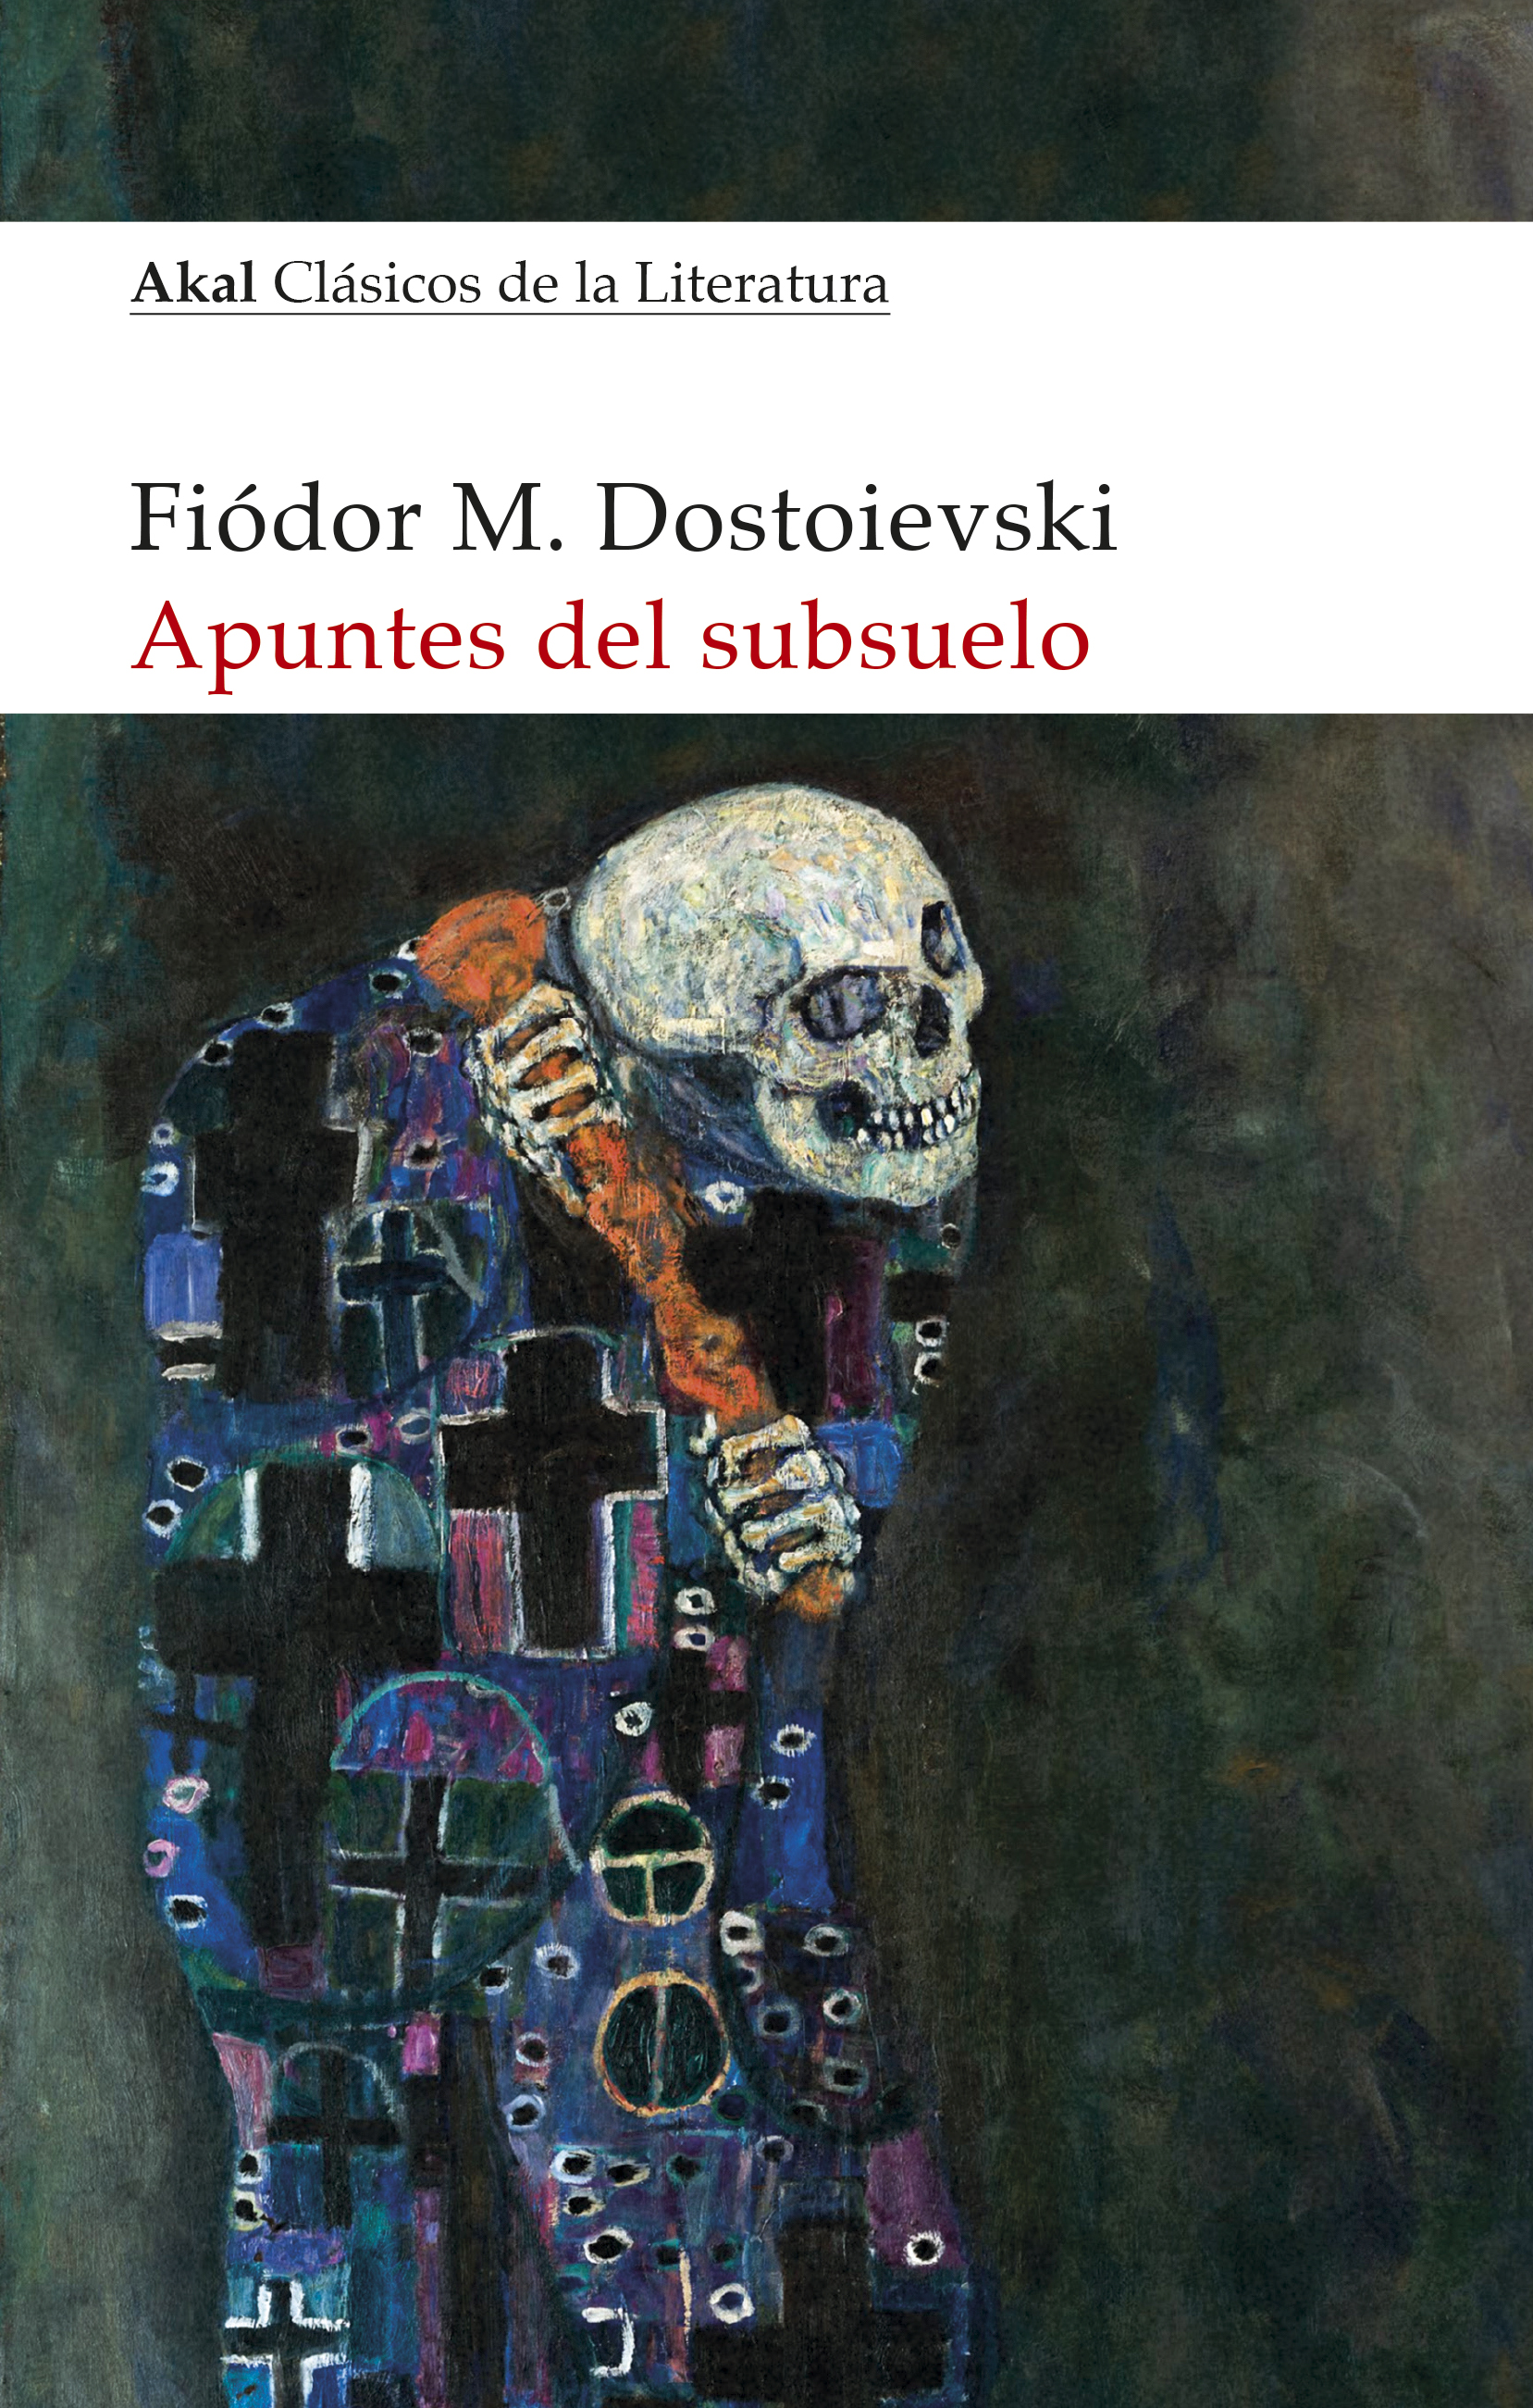 Apuntes del subsuelo - Fiodor M. Dostoievski